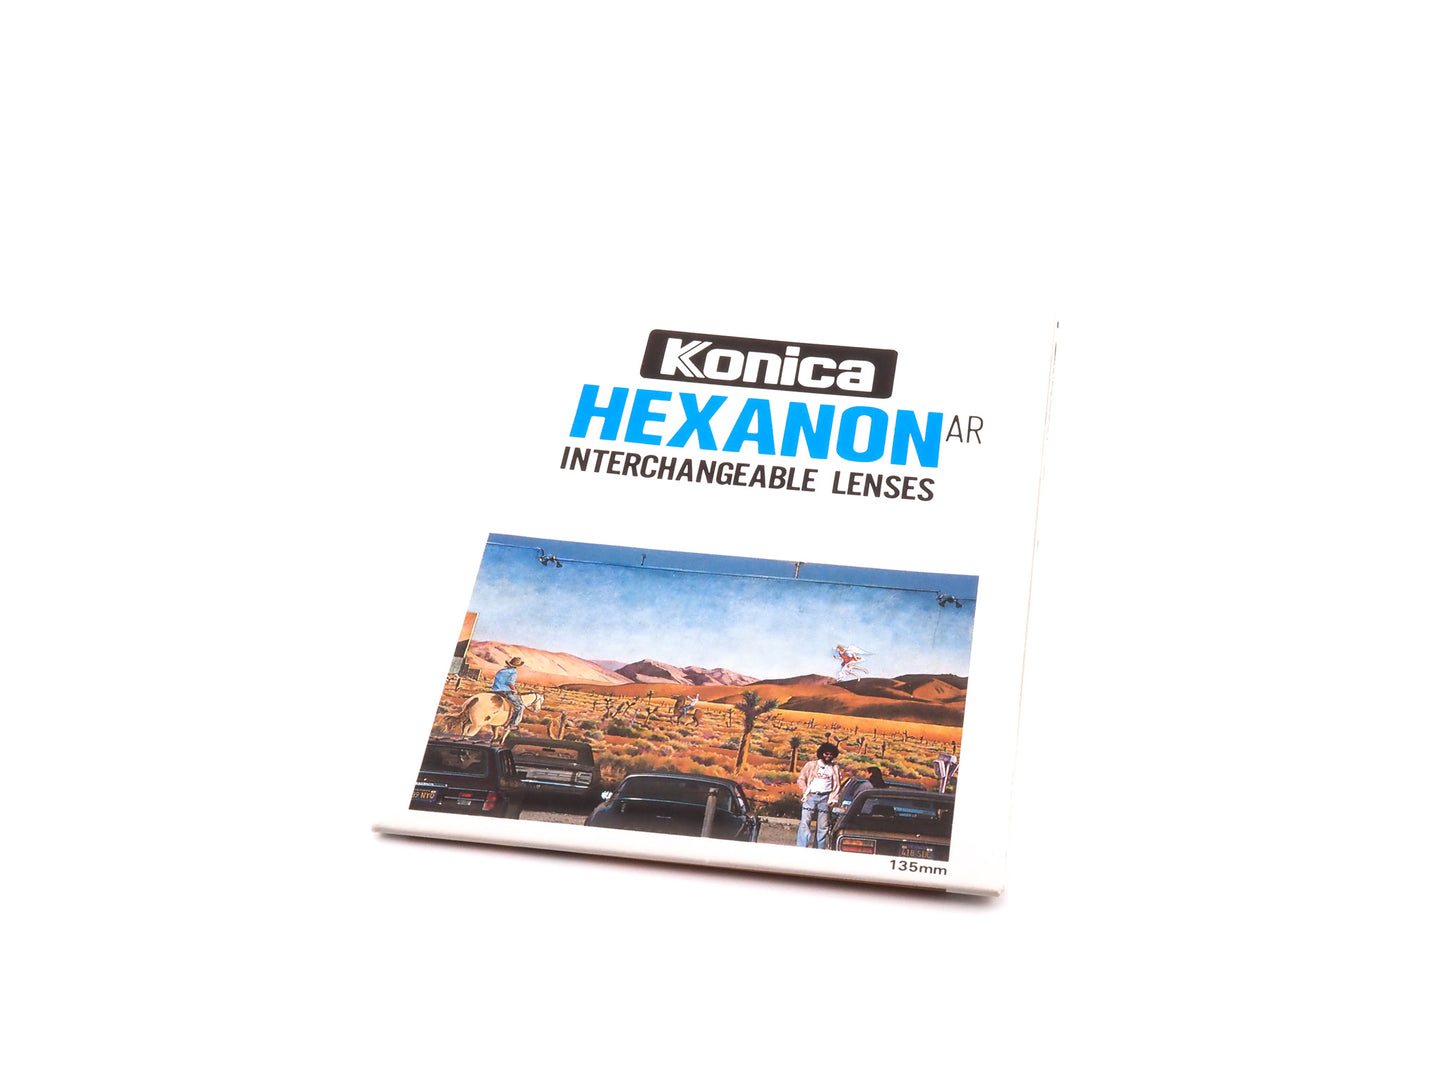 Konica Hexanon AR Interchangeable Lenses Brochure - Accessory